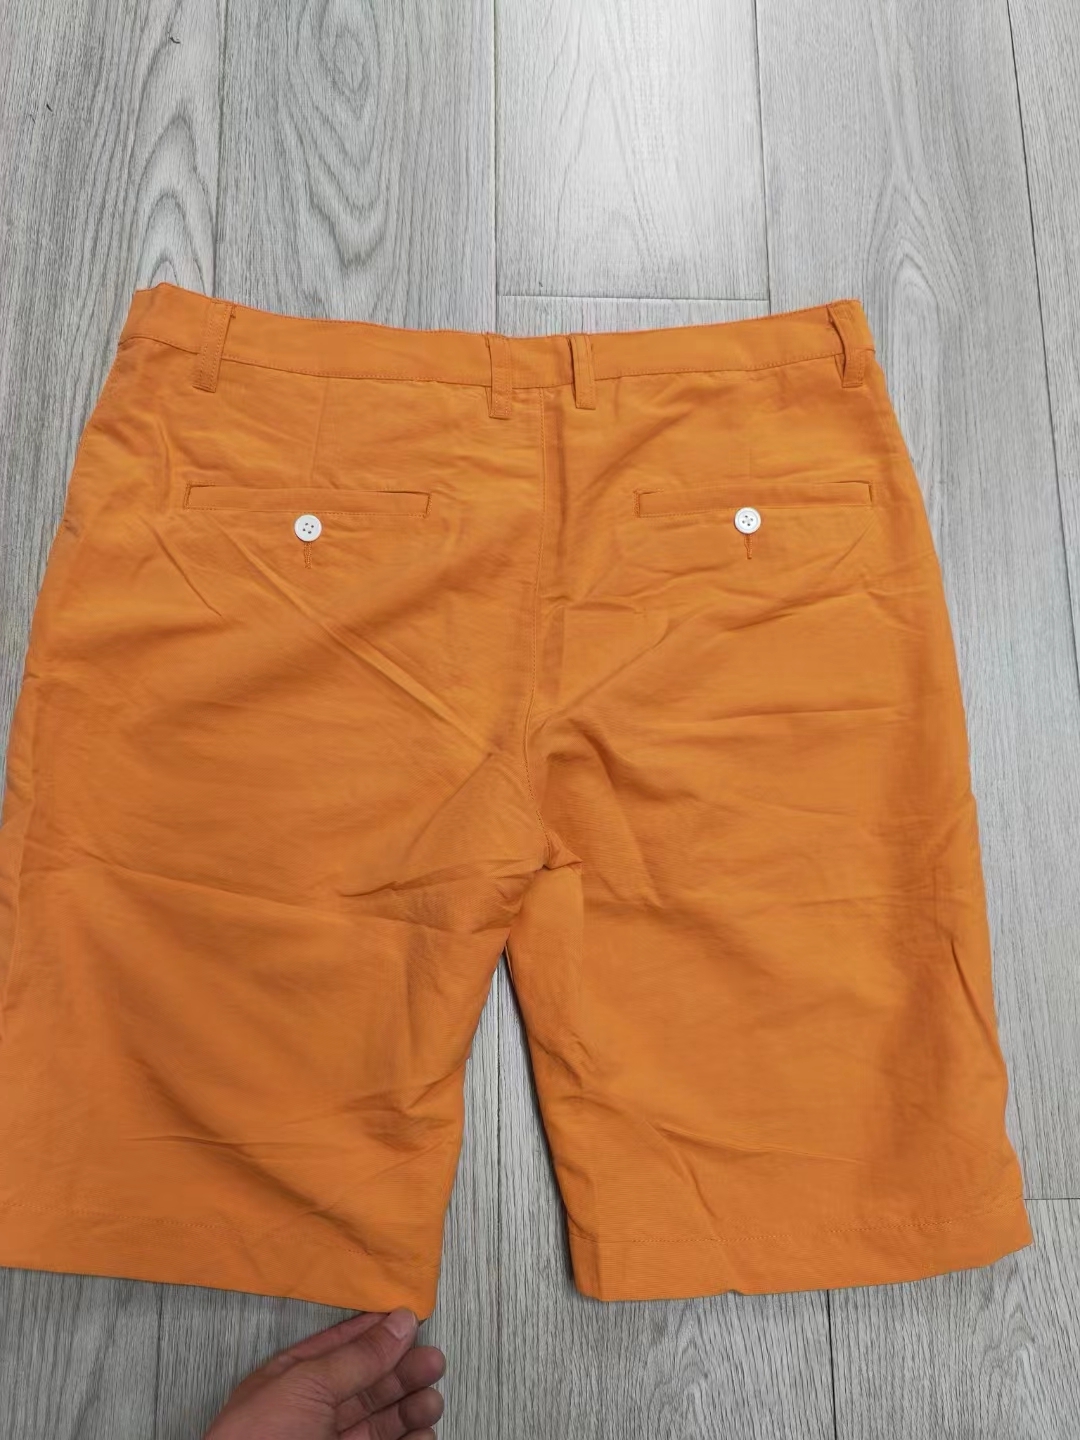  Men\'s Color Shorts in Stock